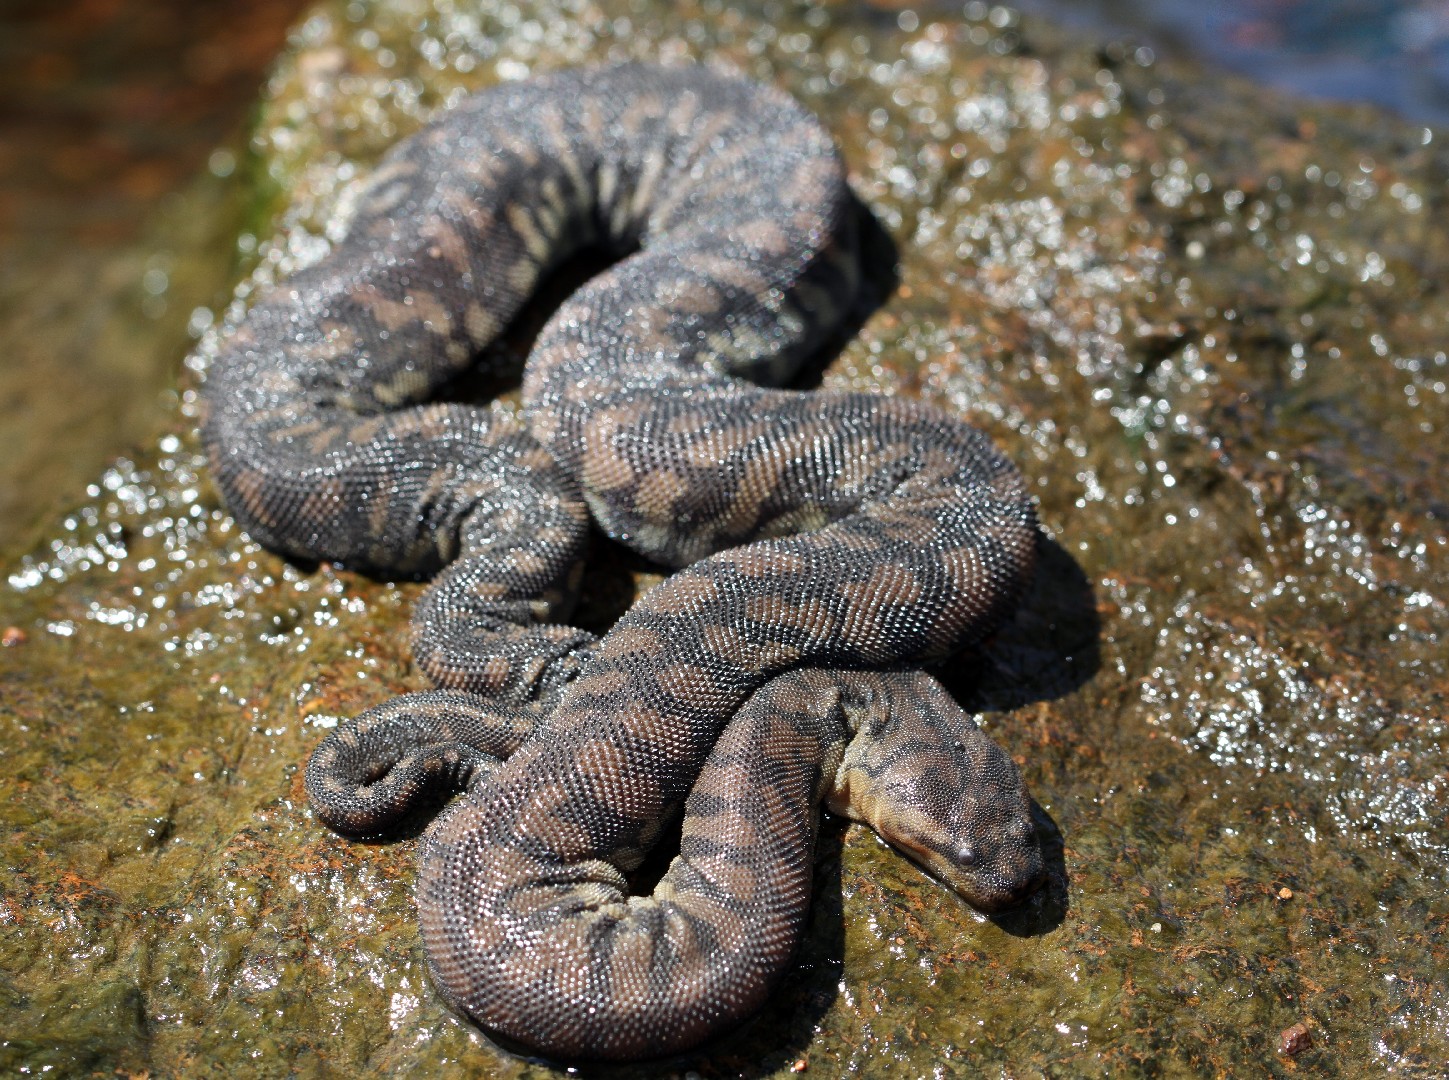 Java wart snakes (Acrochordus)